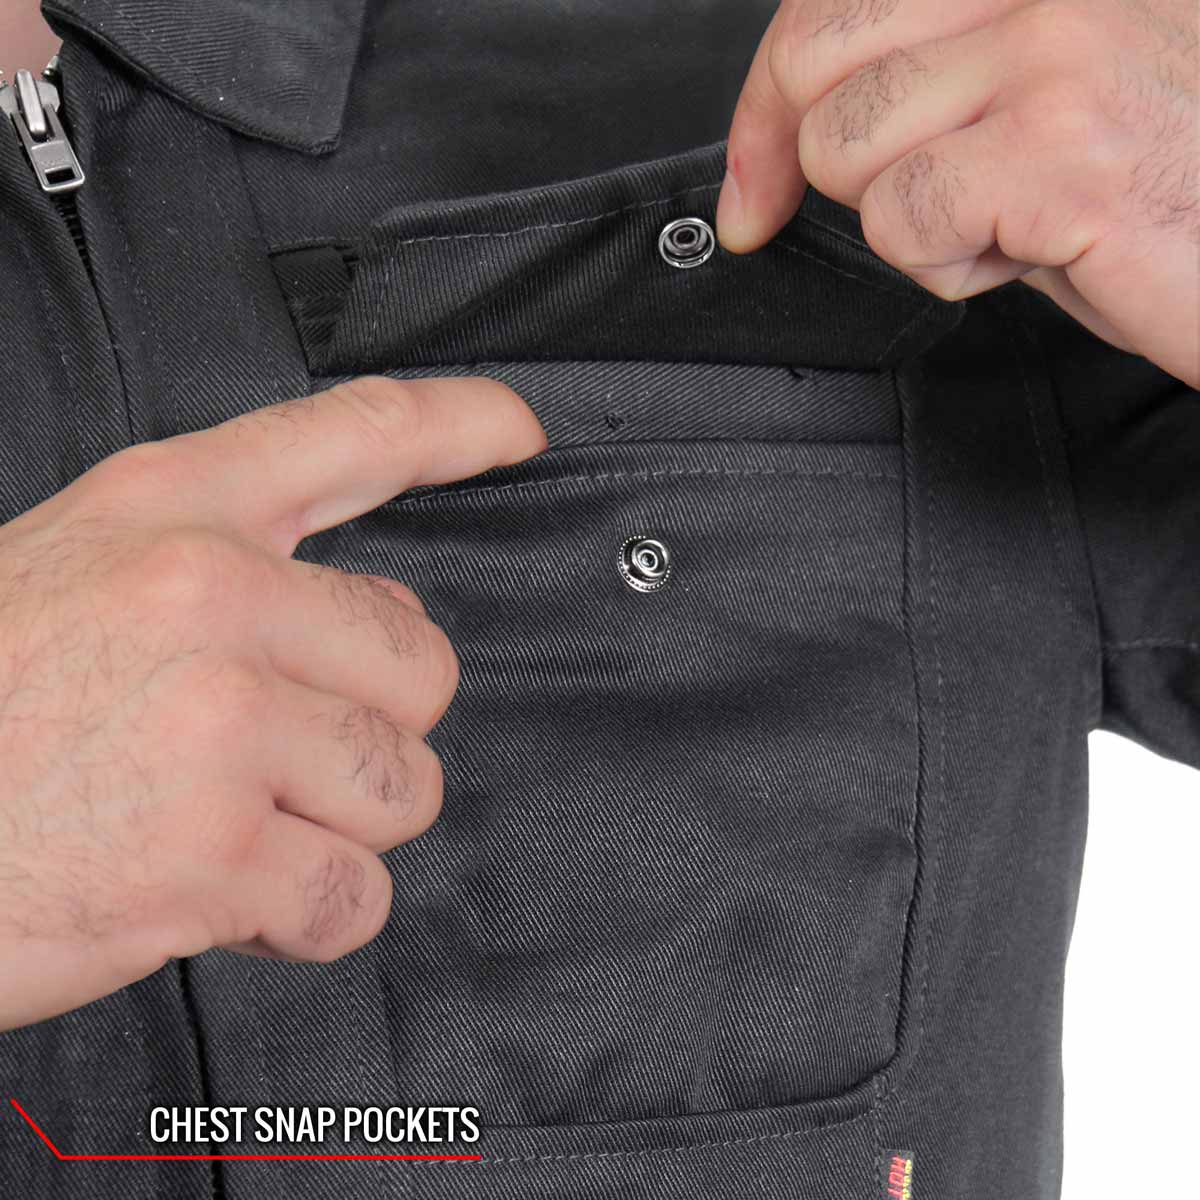 Hot Leathers JKM6001 Men's Black Denim Armored Shirt Jacket